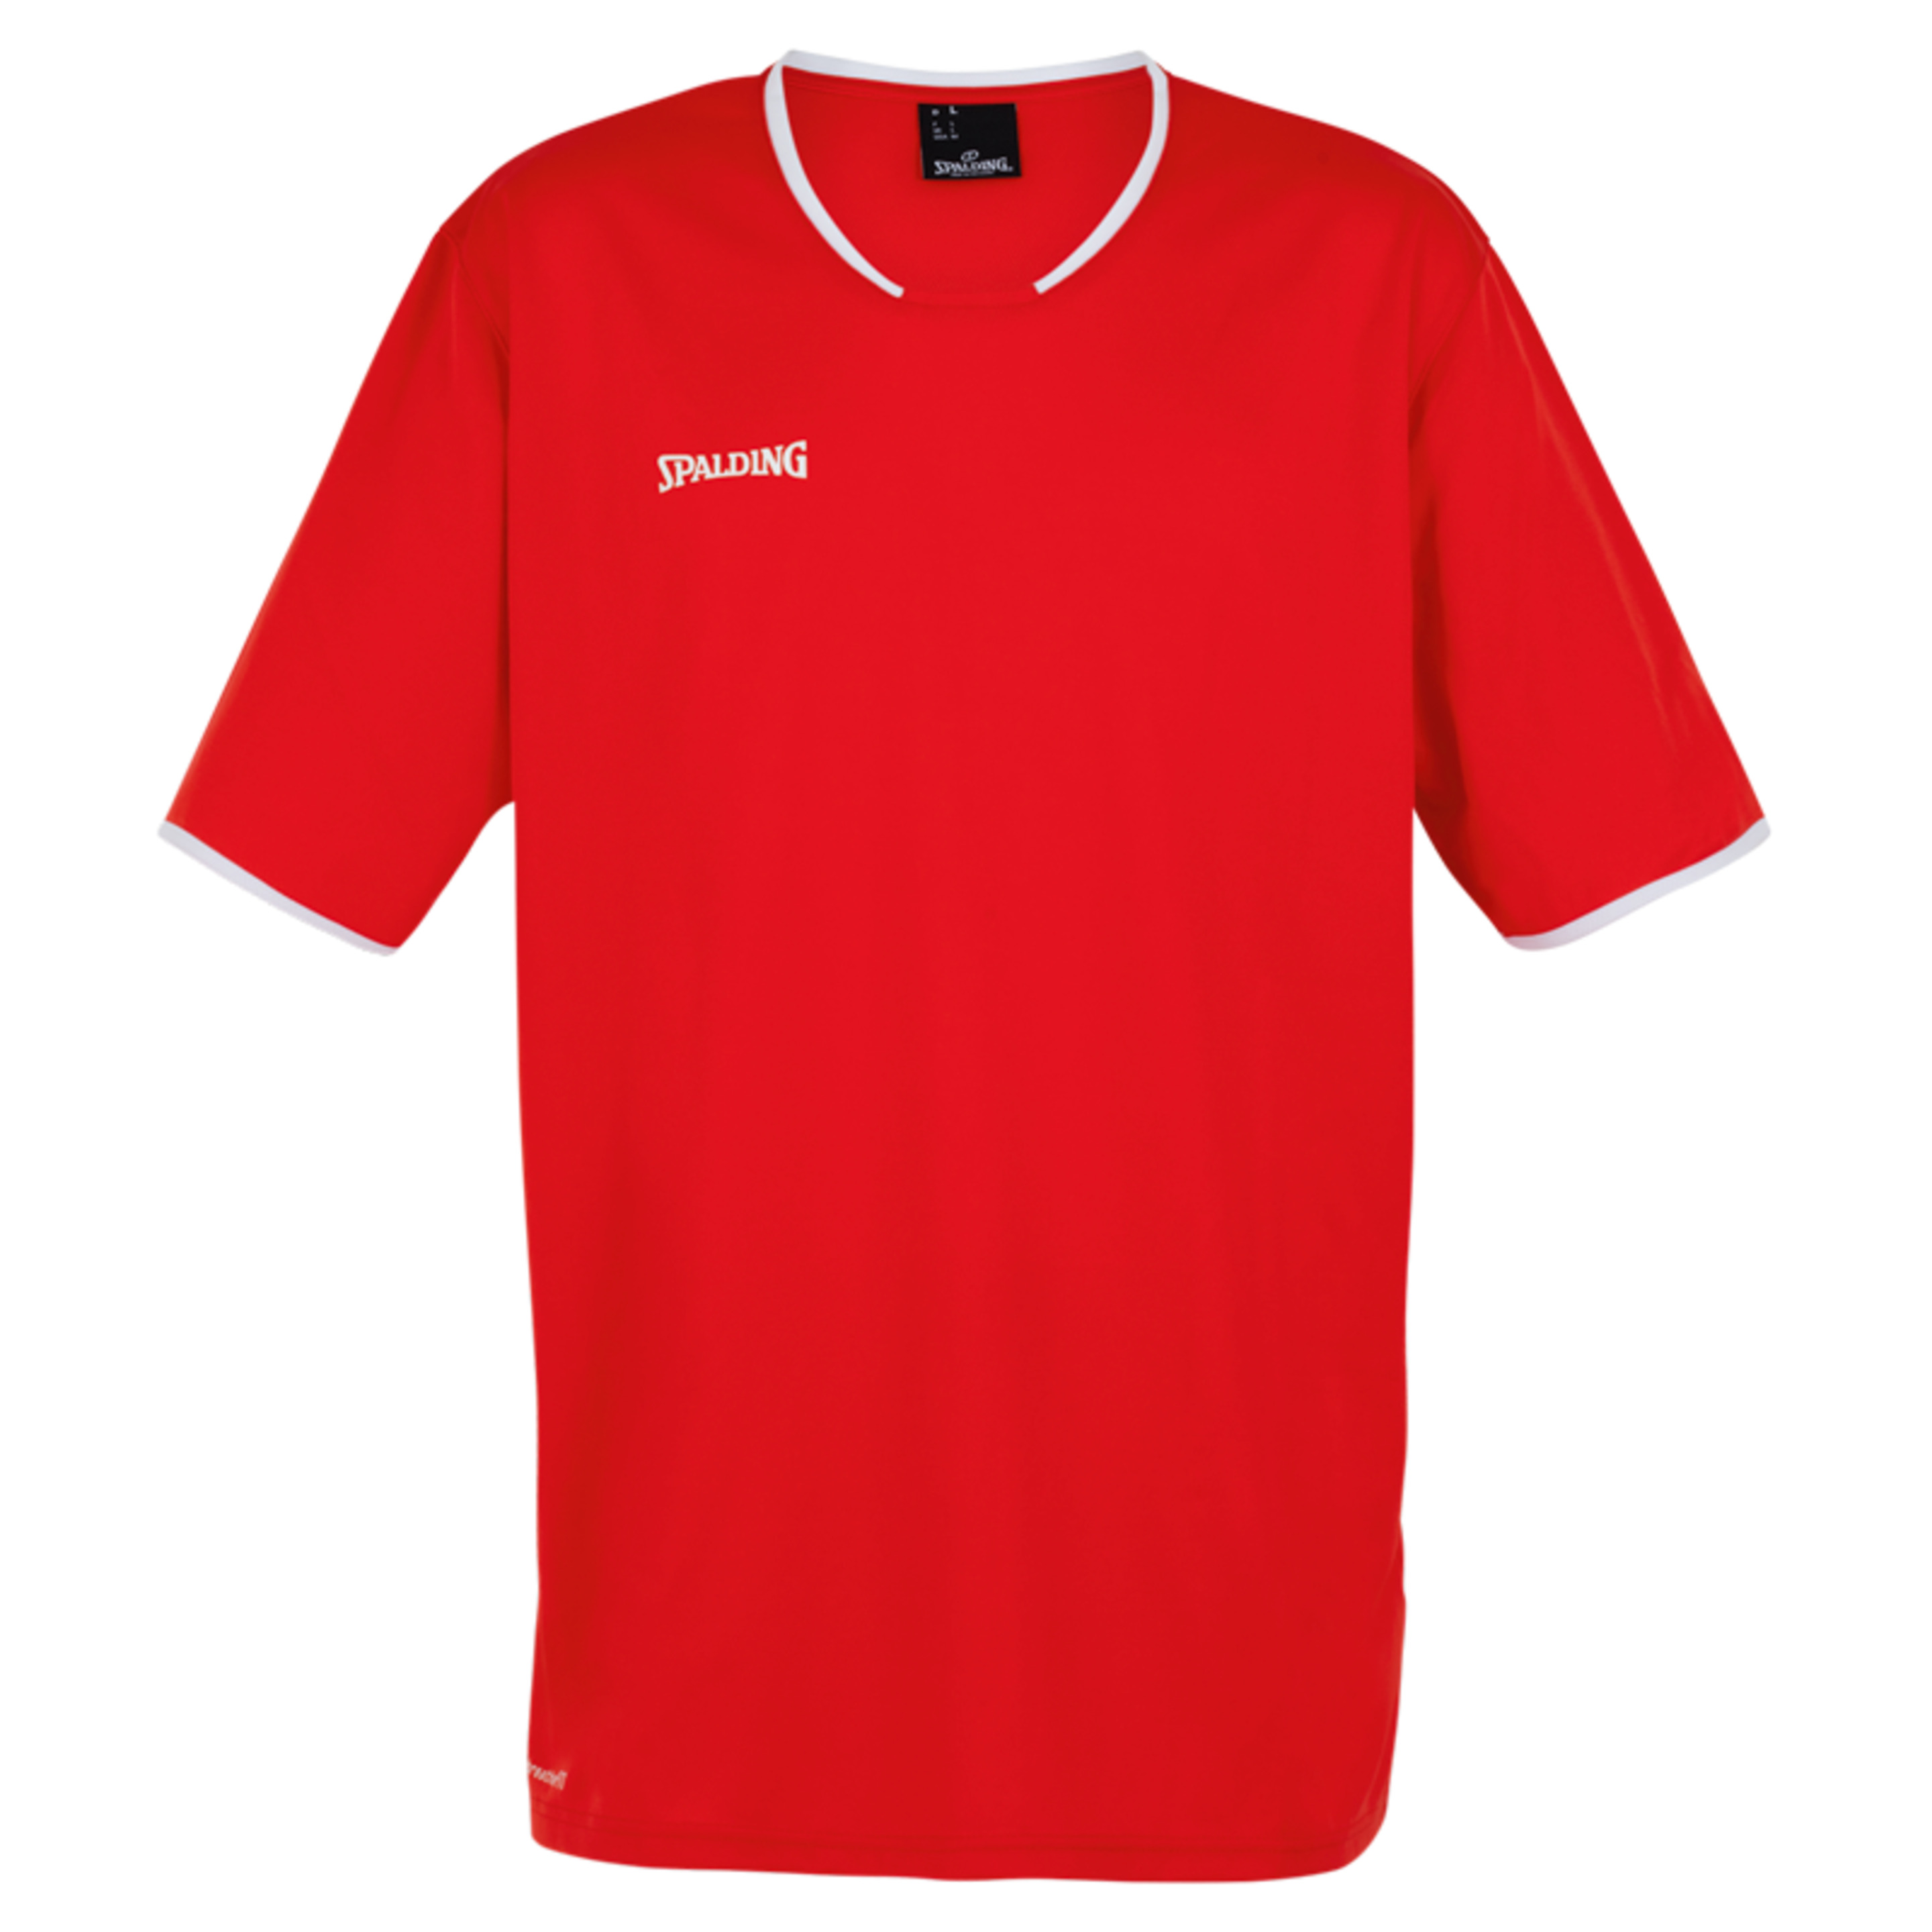 Move Shooting Shirt S/s Rojo/blanco Spalding - rojo - 